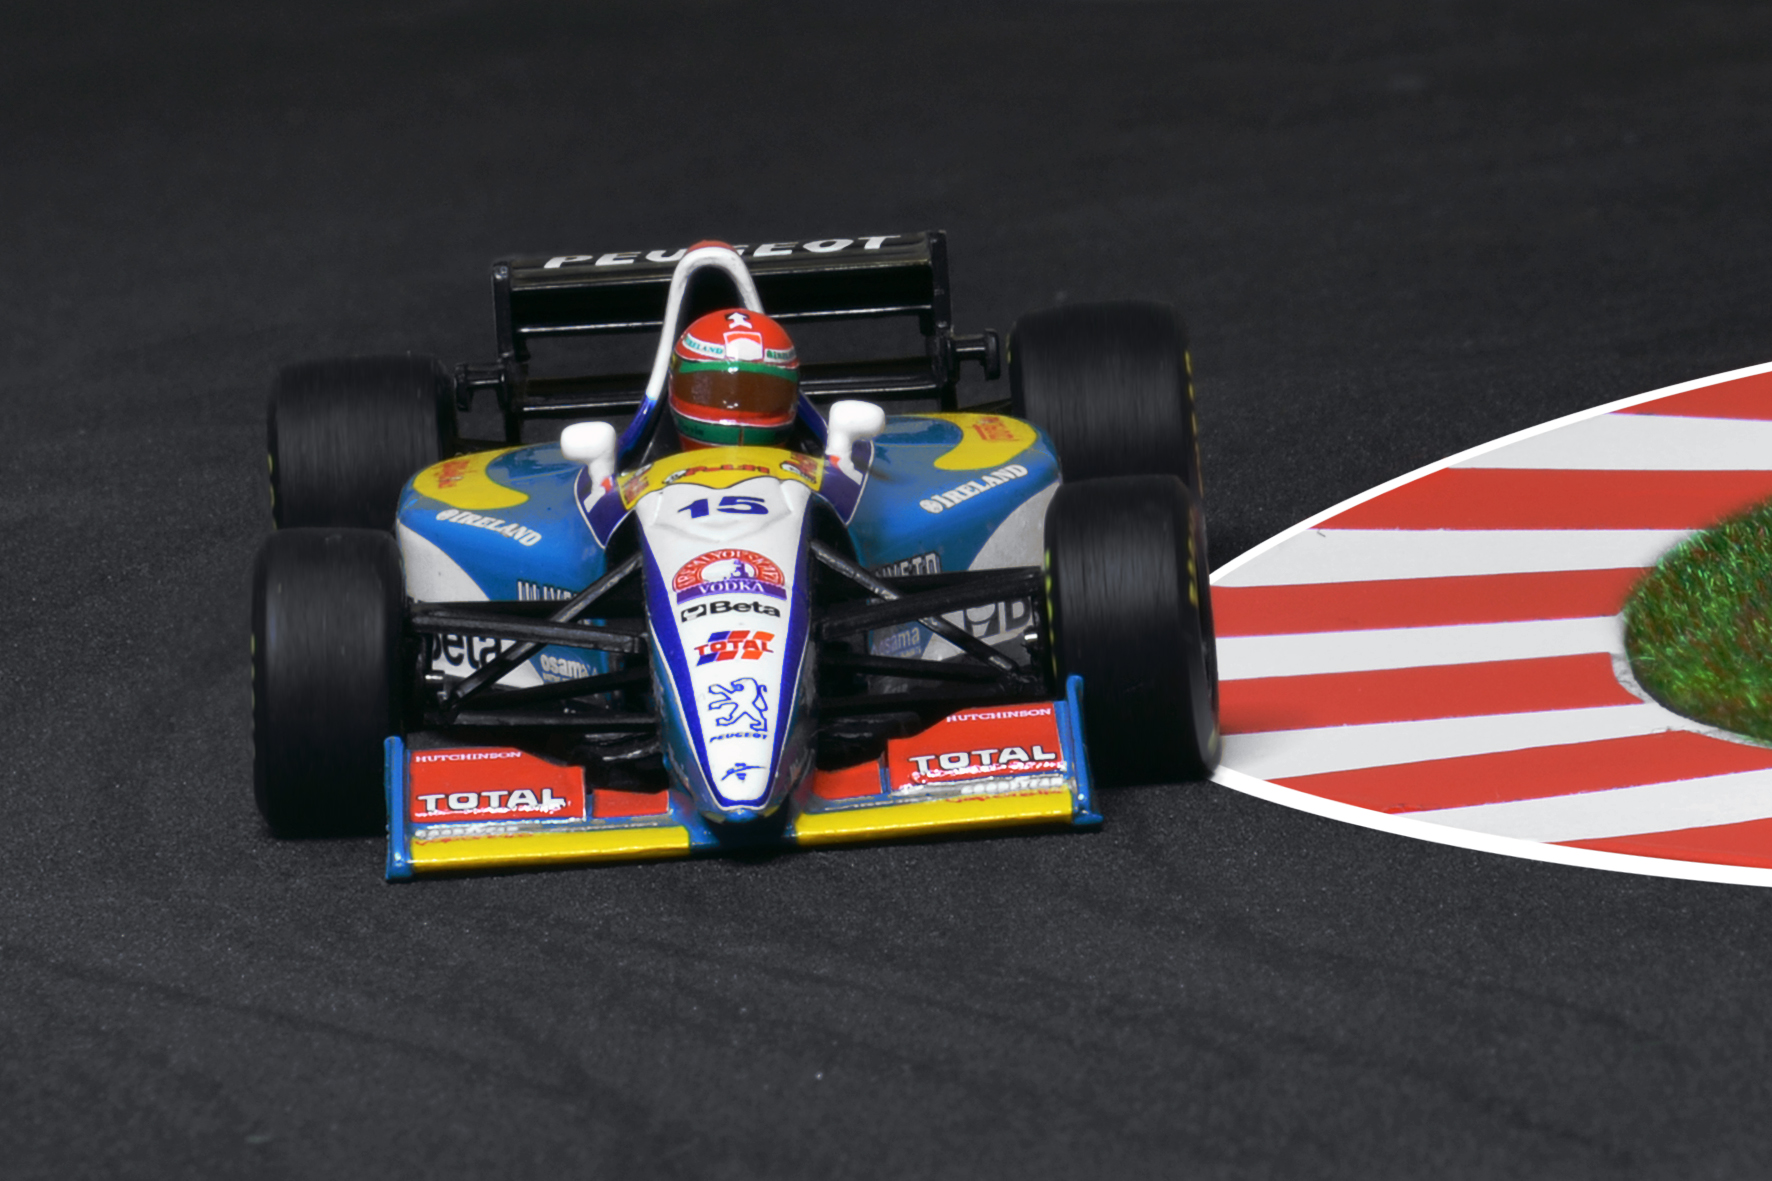 Jordan 195 Eddie Irvine 1995 - Minichamps 1:43